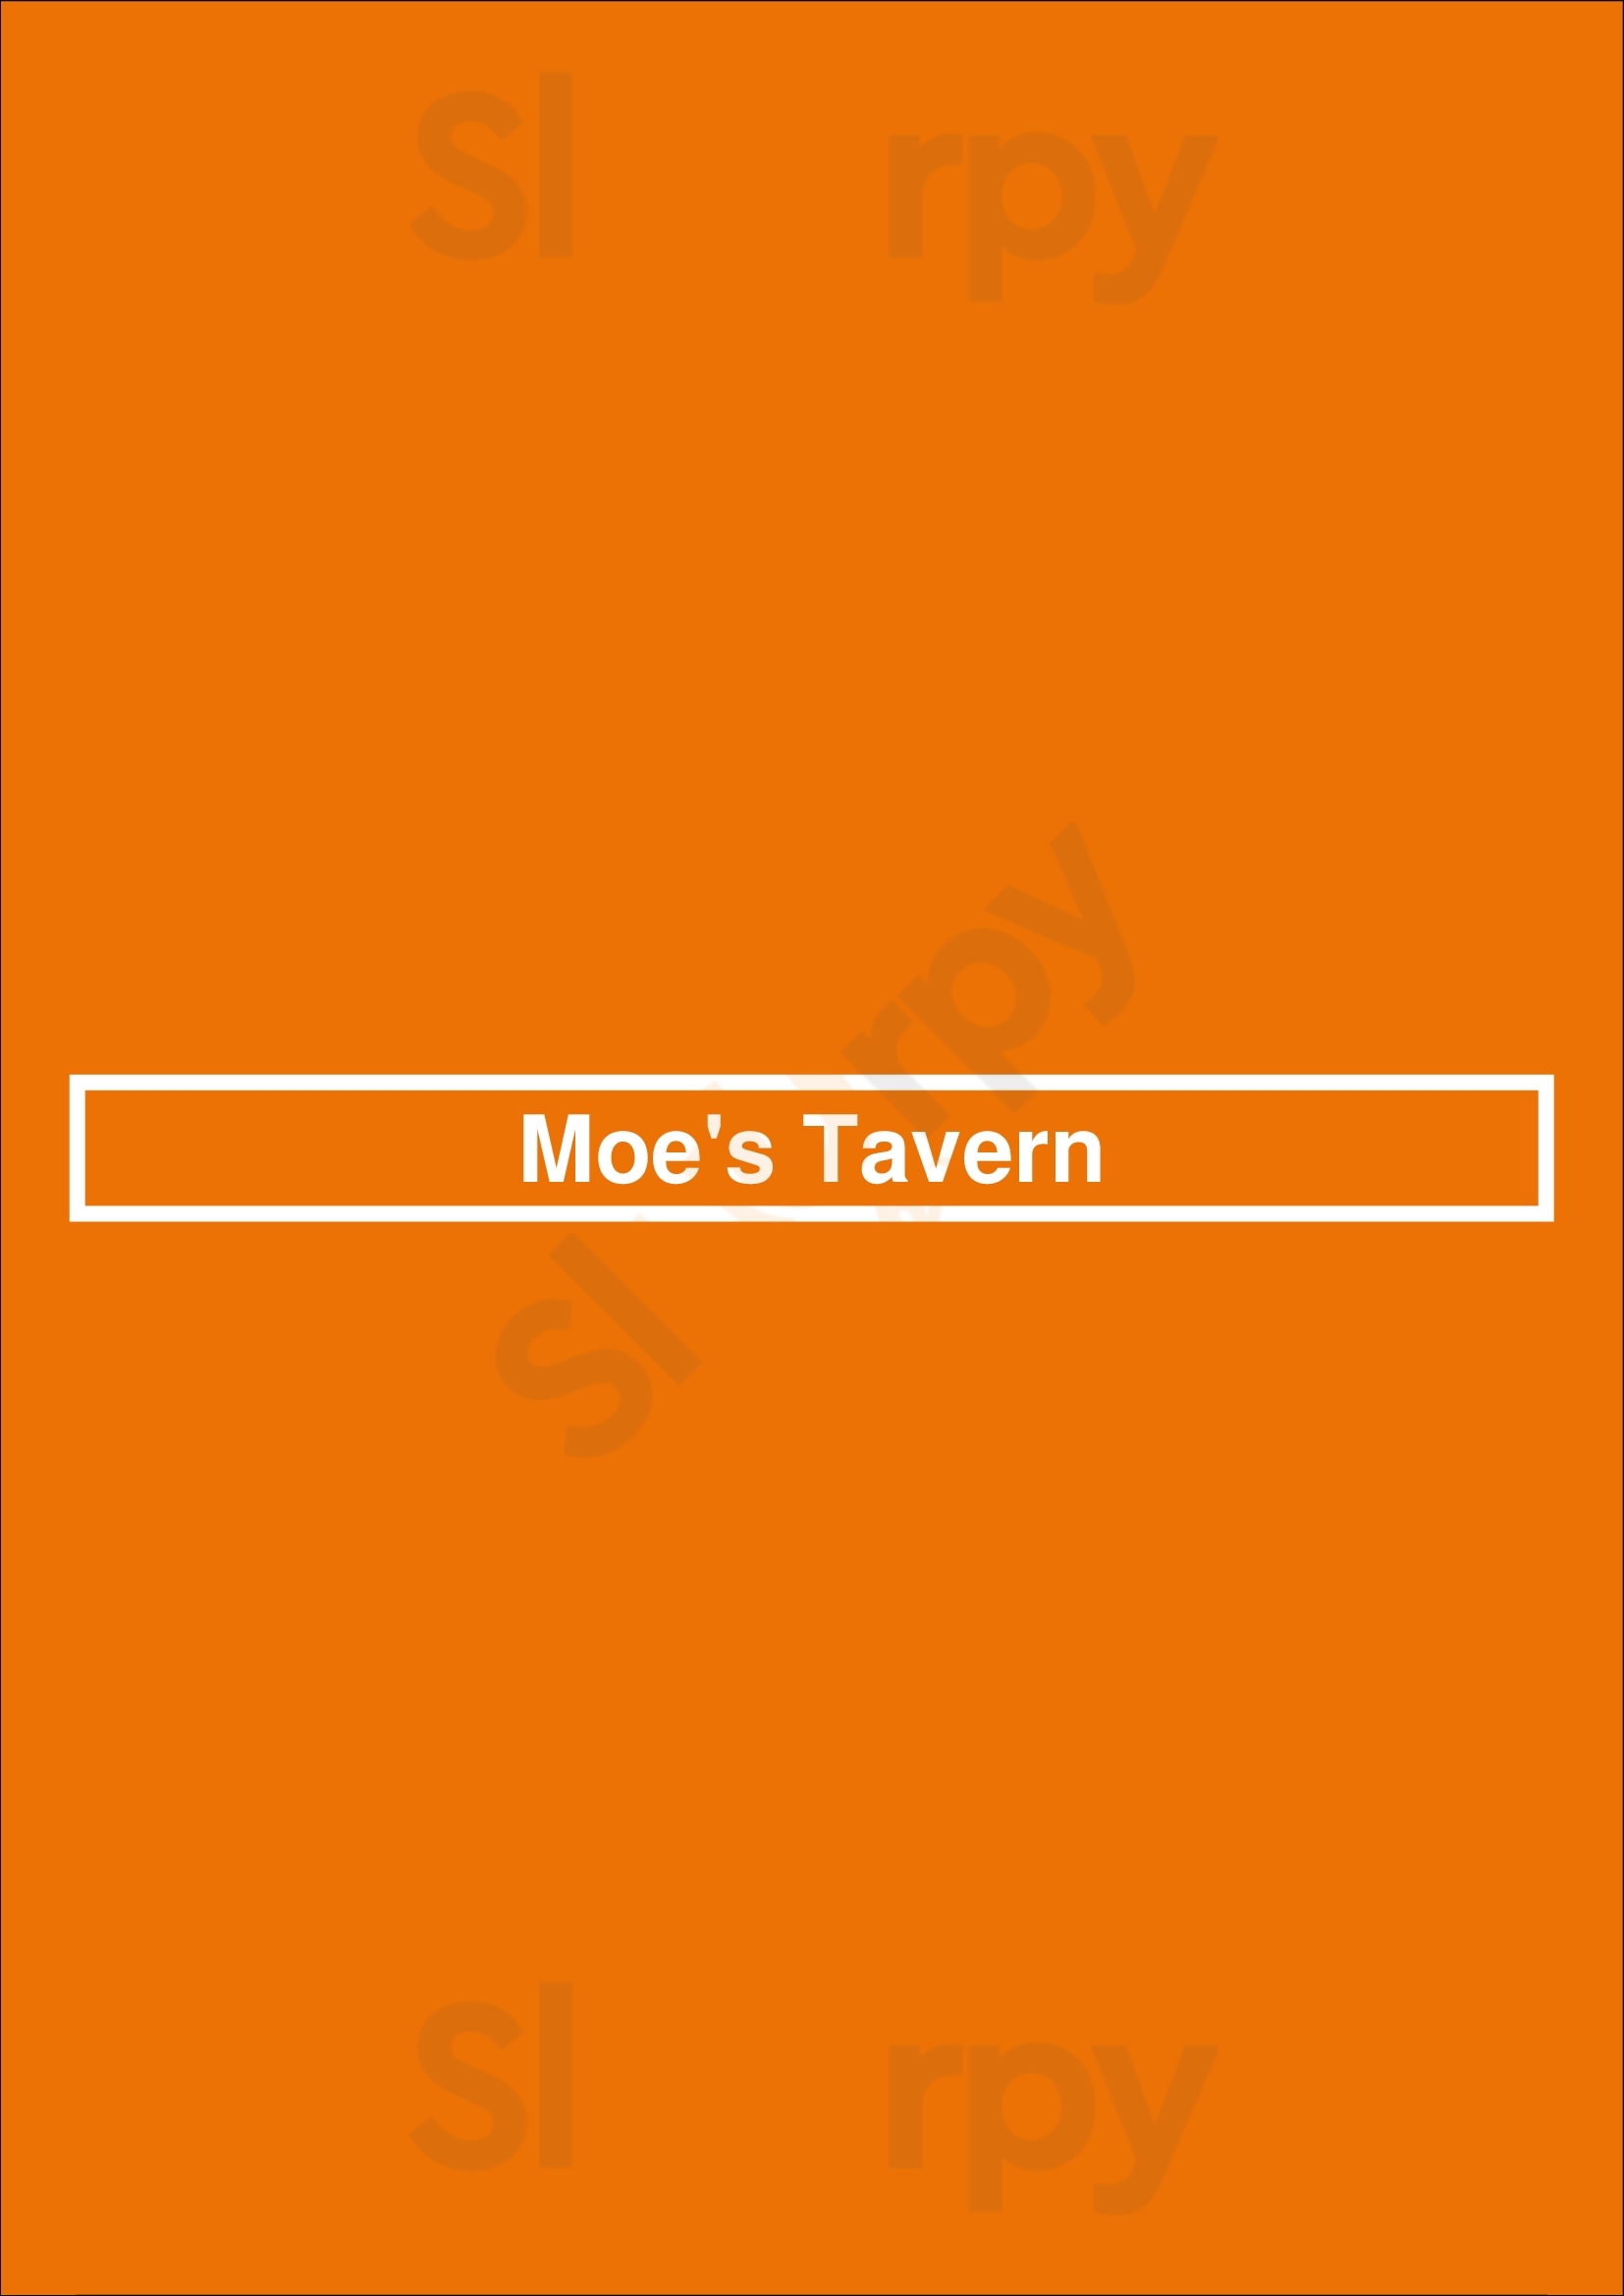 Moe's Tavern Cleveland Menu - 1